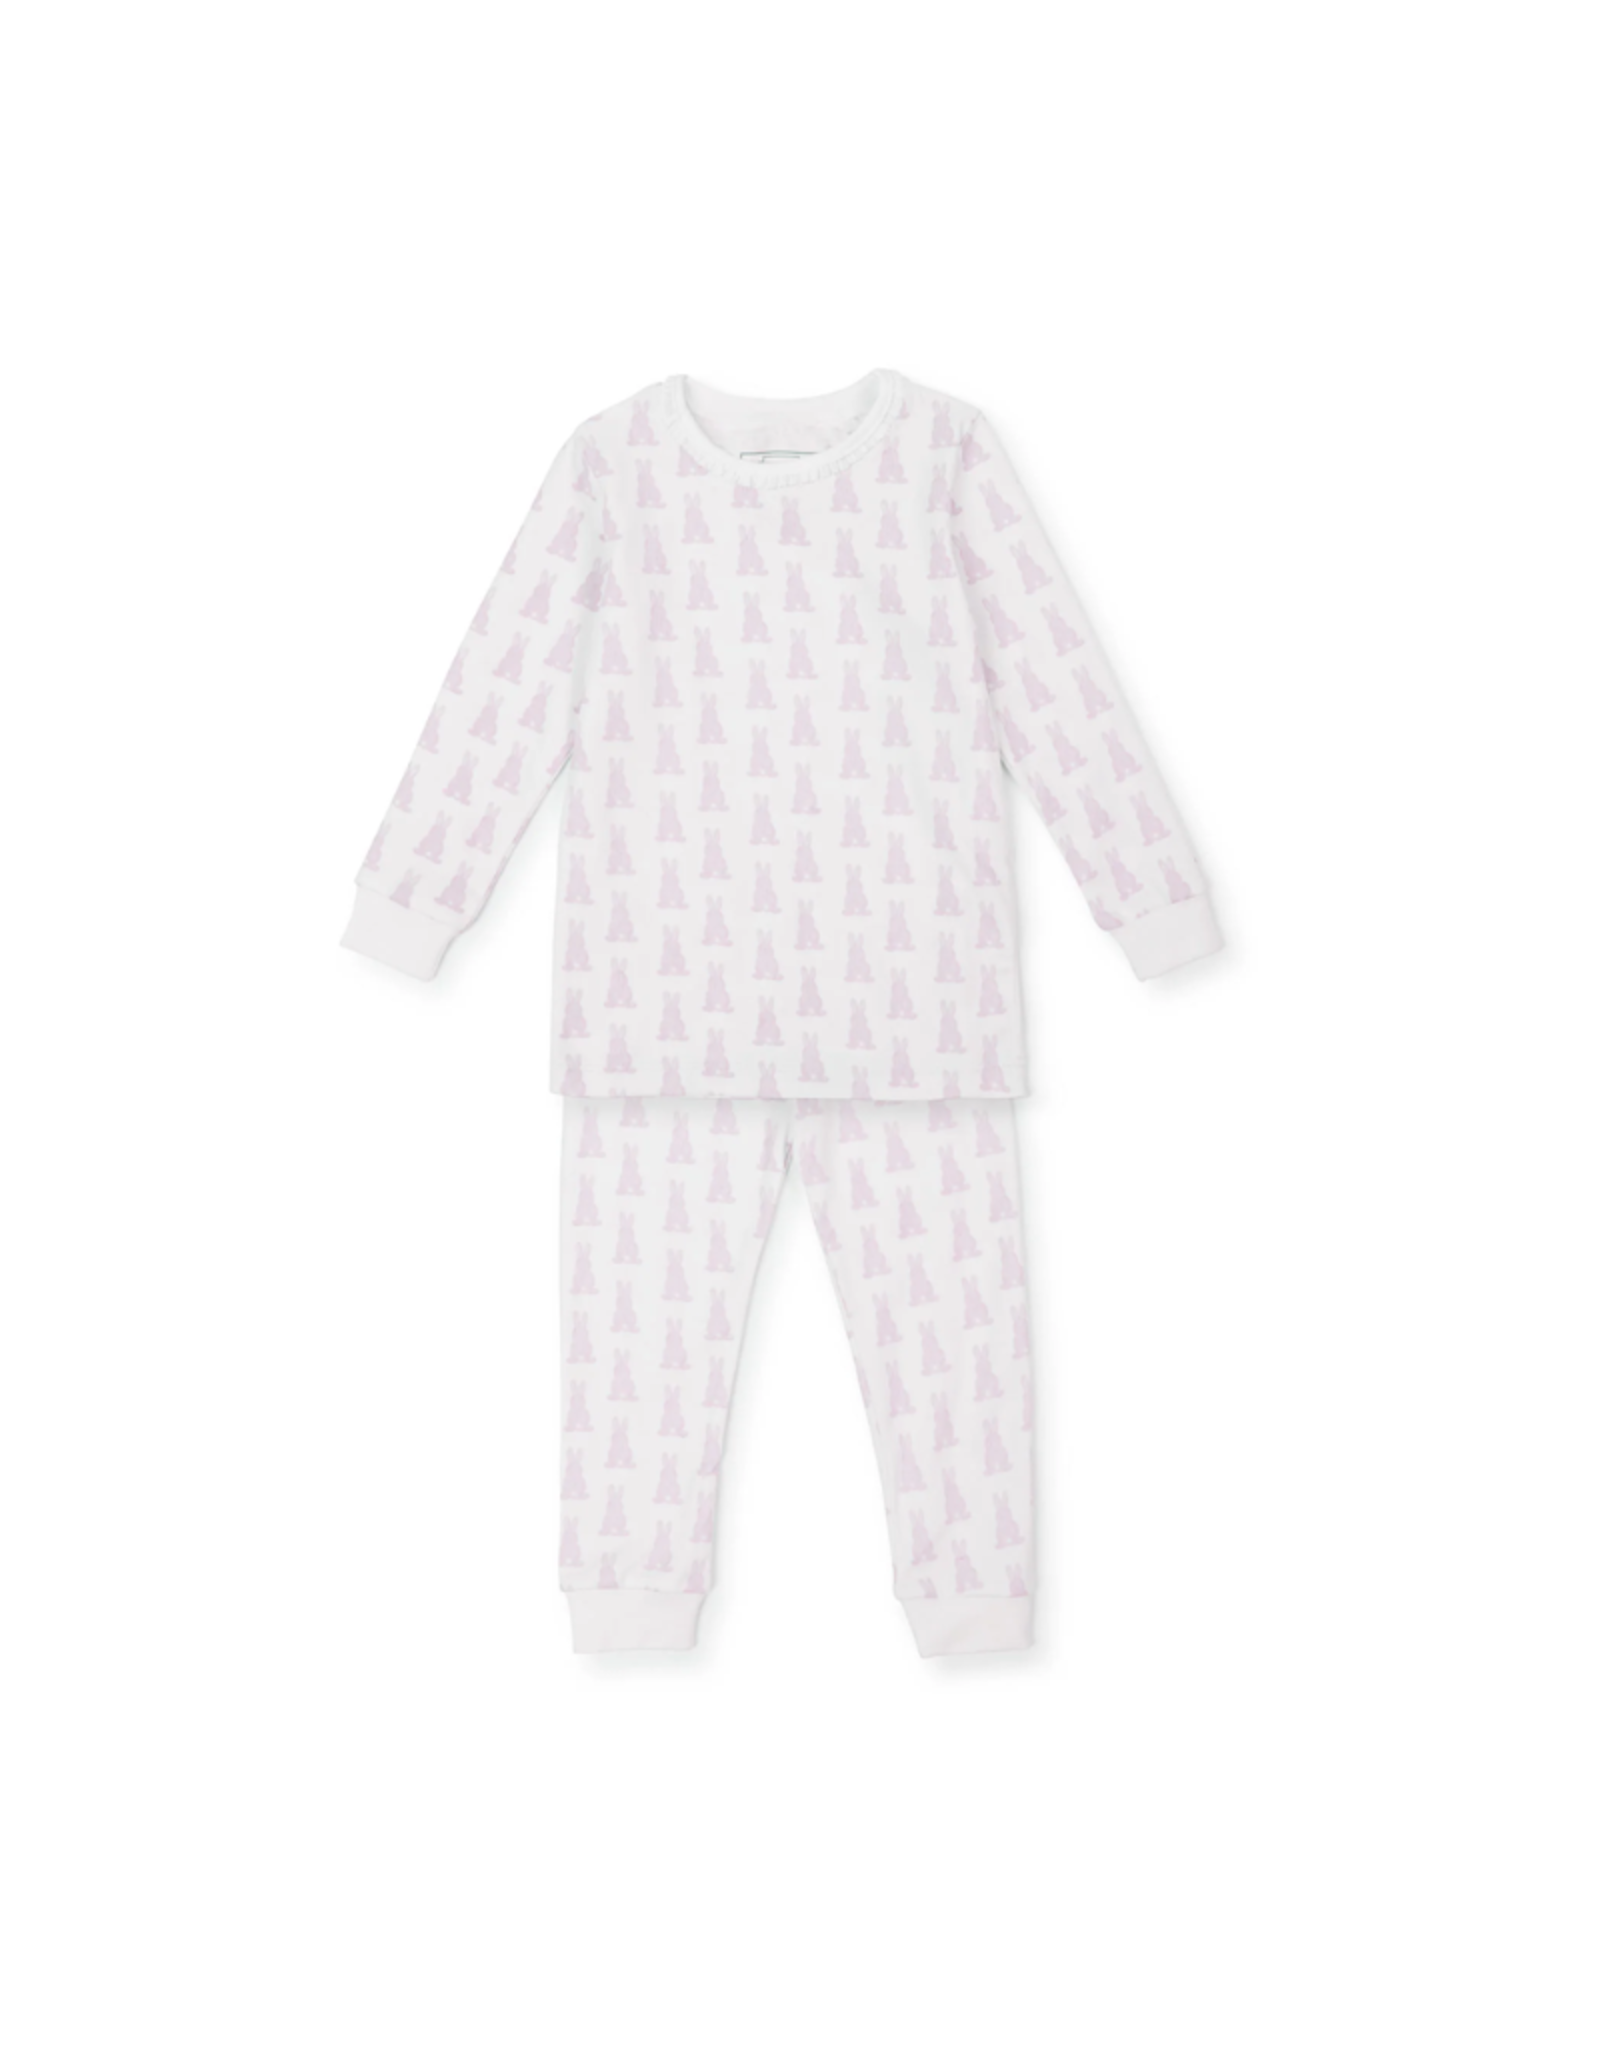 Lila + Hayes Ava Pajama Set, Bunny Tails Pink